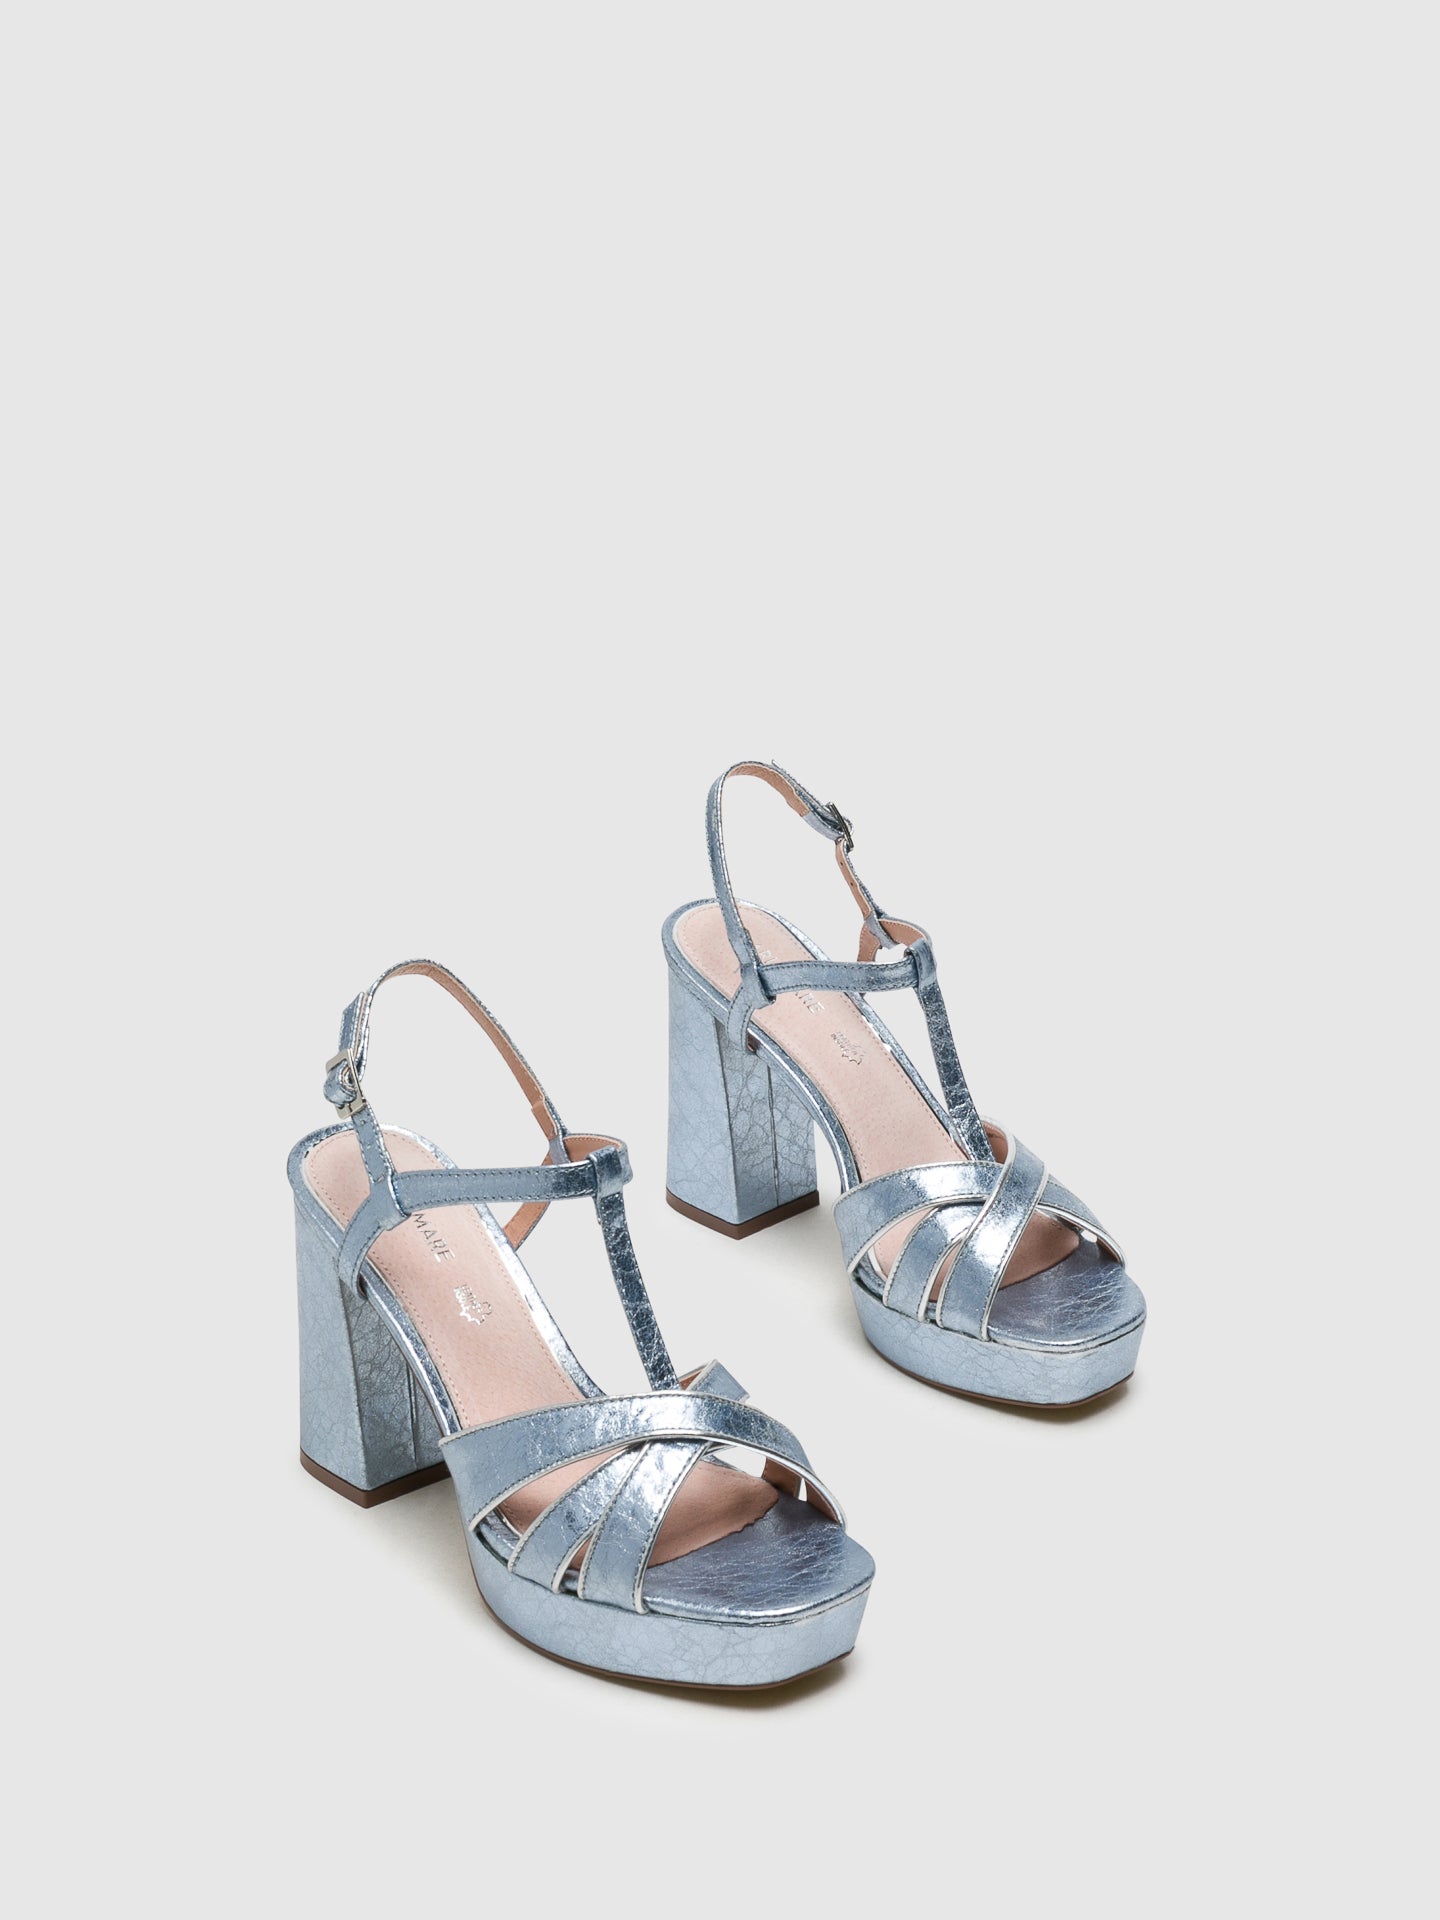 Mariamare Silver Sling-Back Sandals